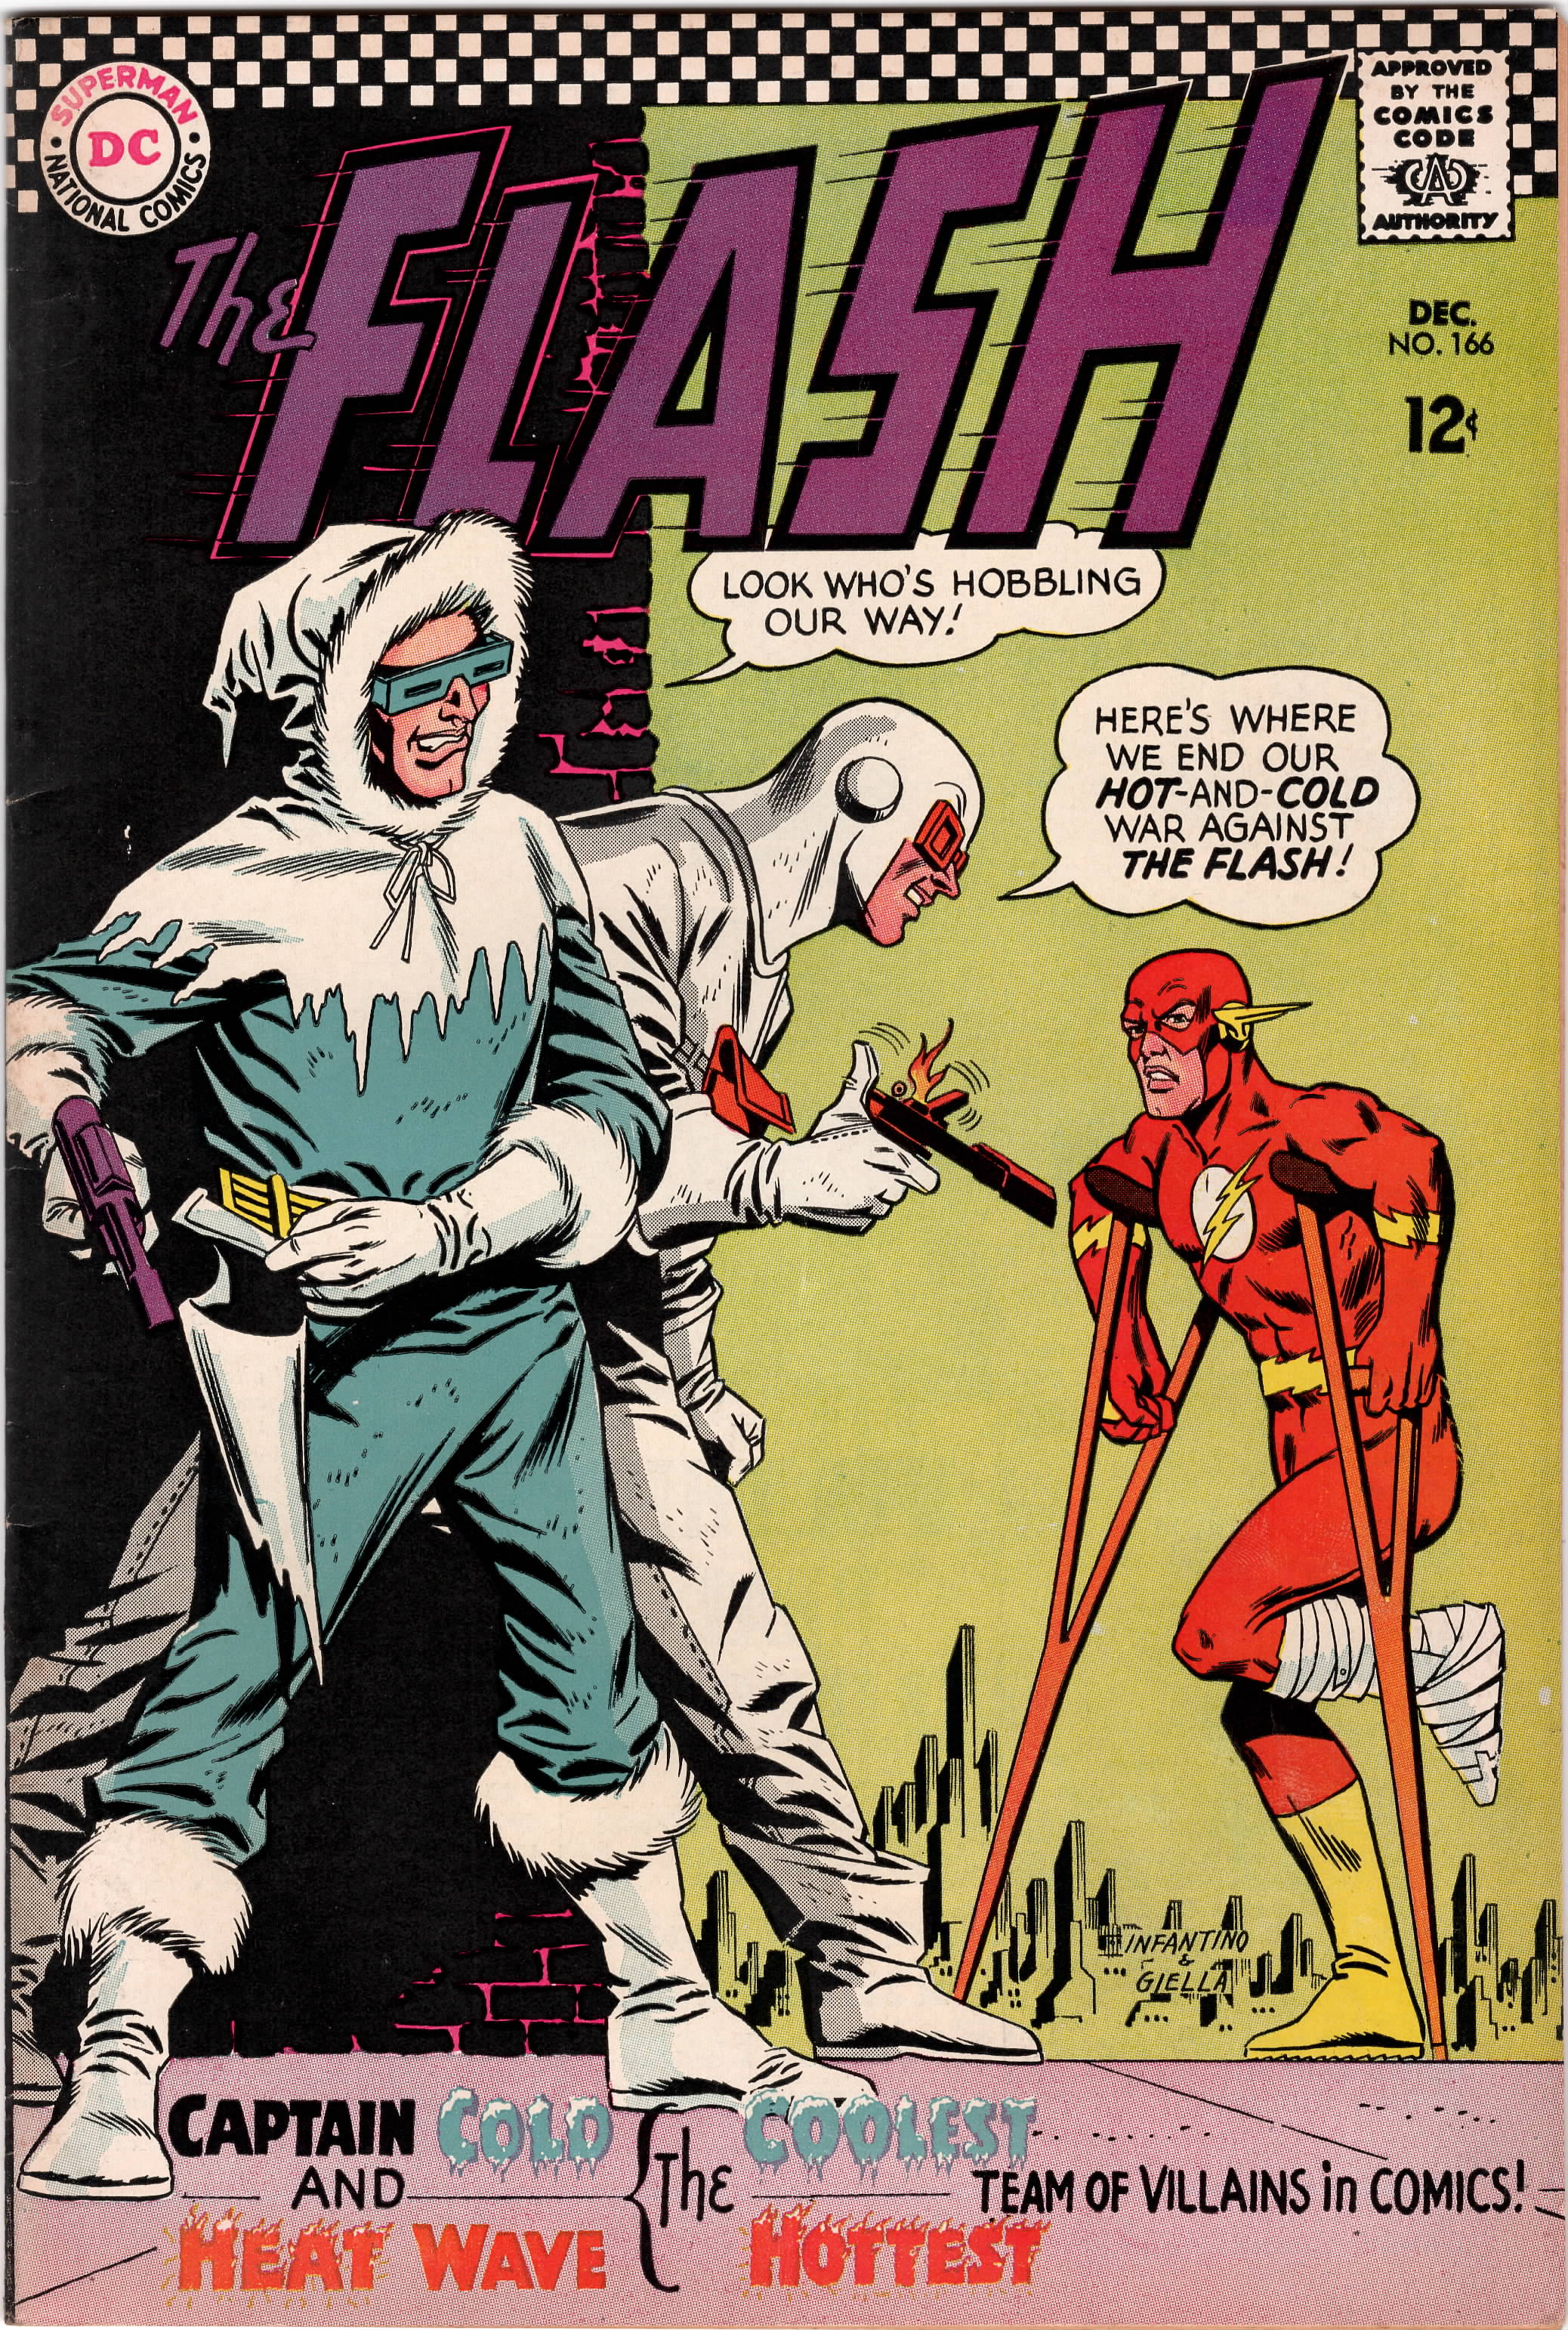 Flash #166